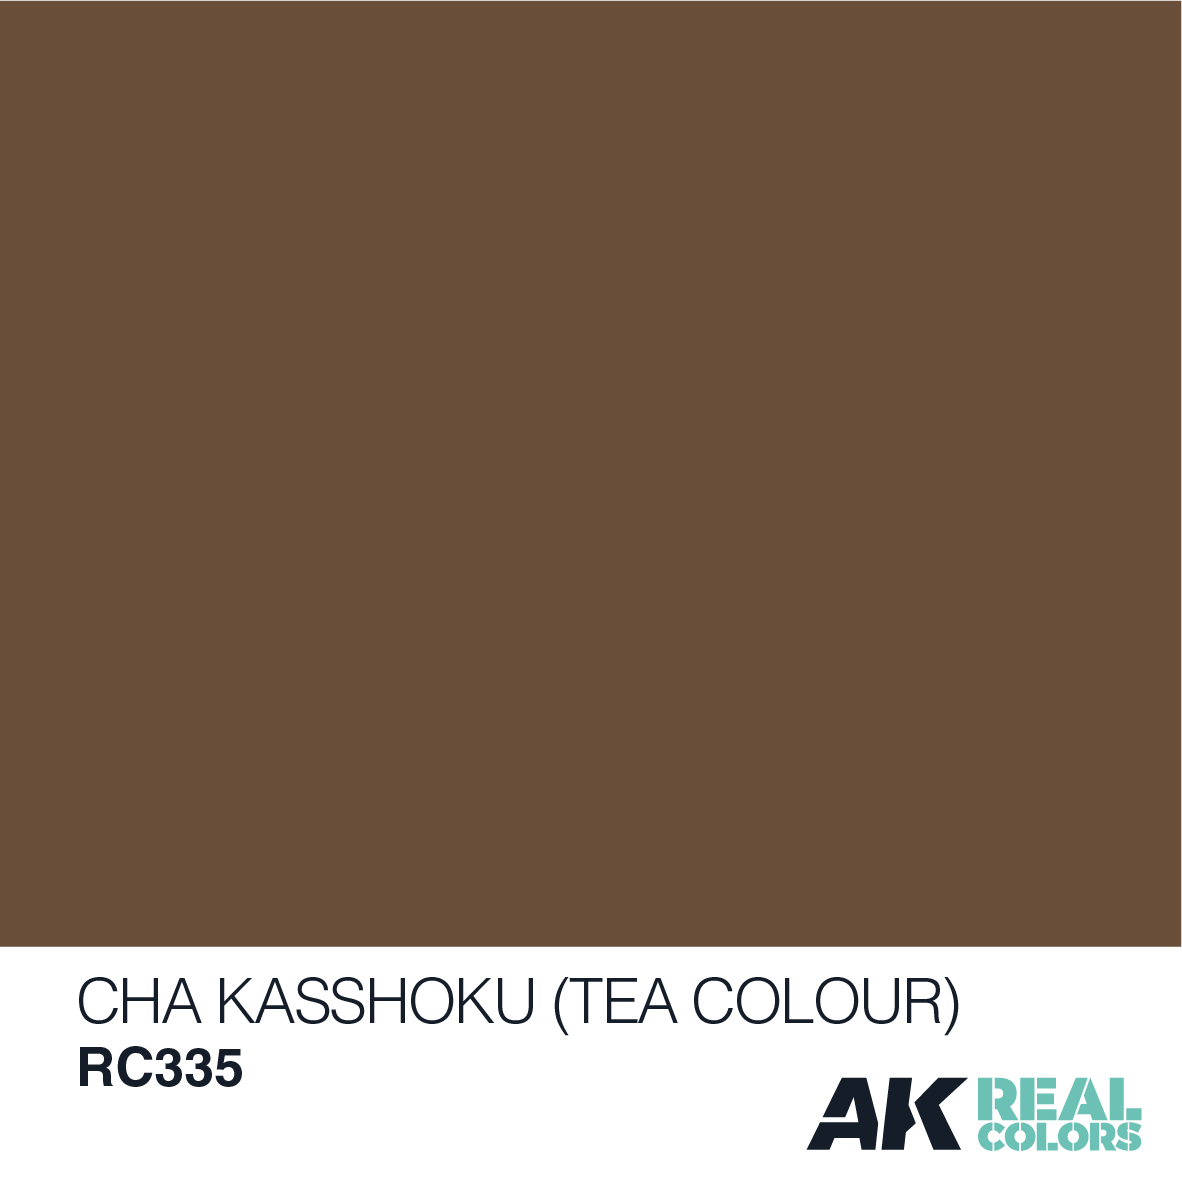 IJA #31 Cha Kasshoku (Tea Colour)